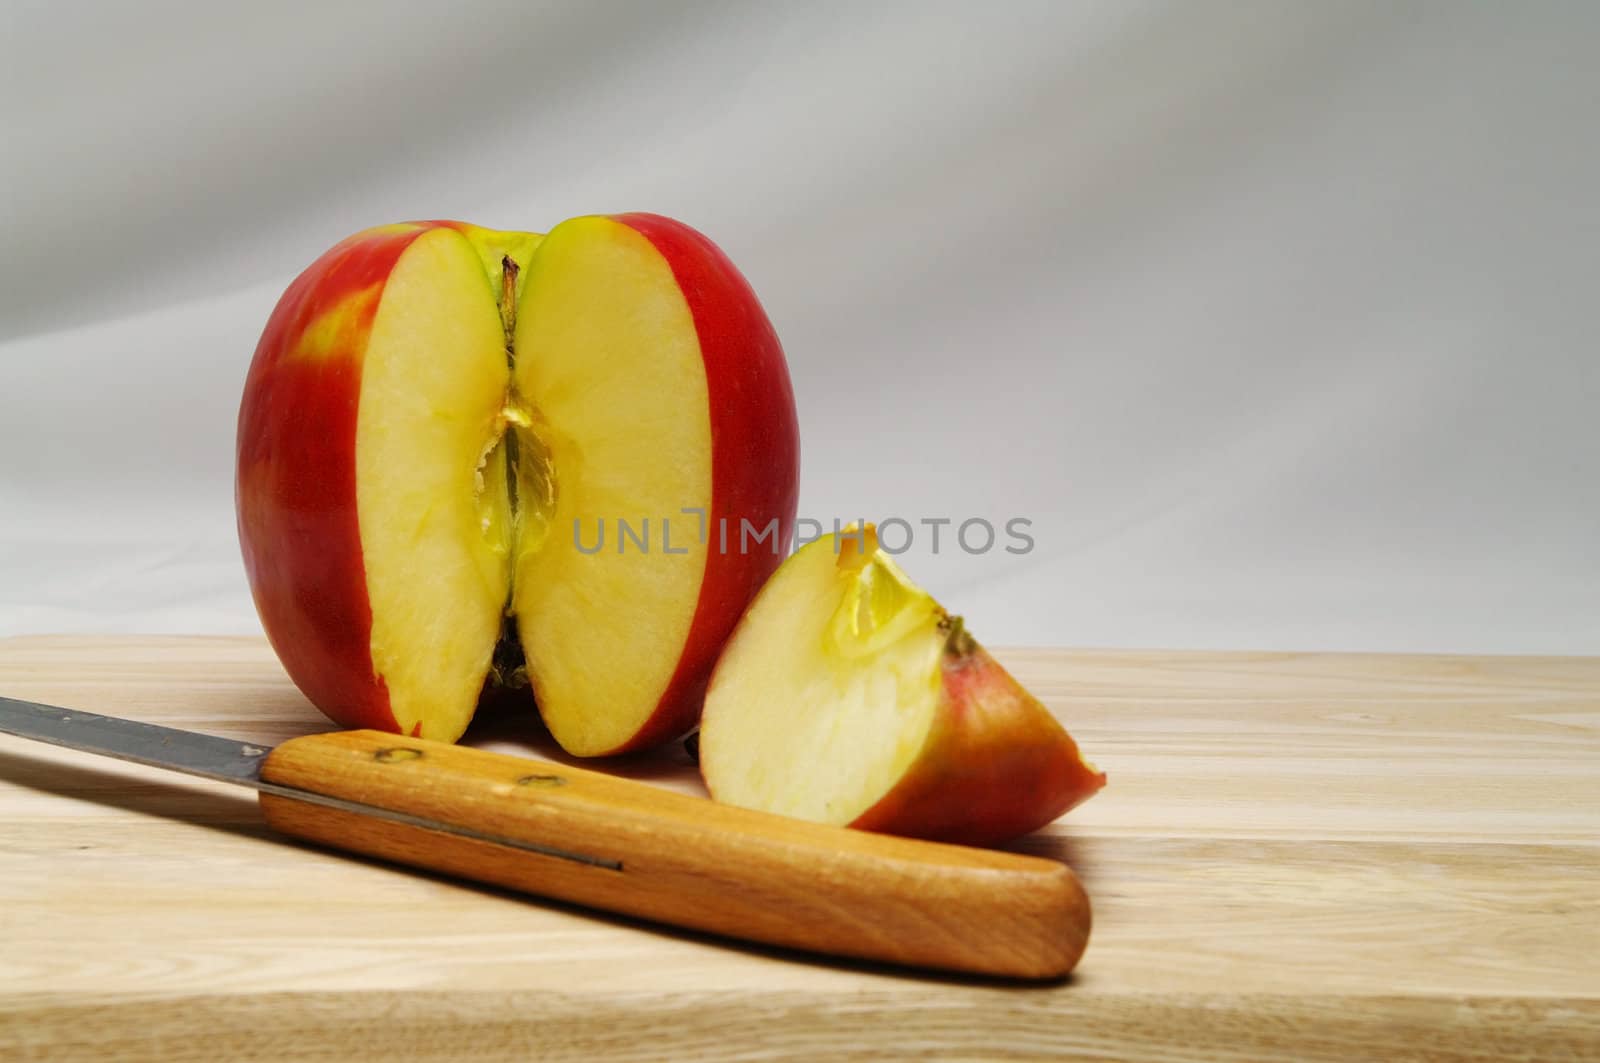 An apple sliced ready for eating 